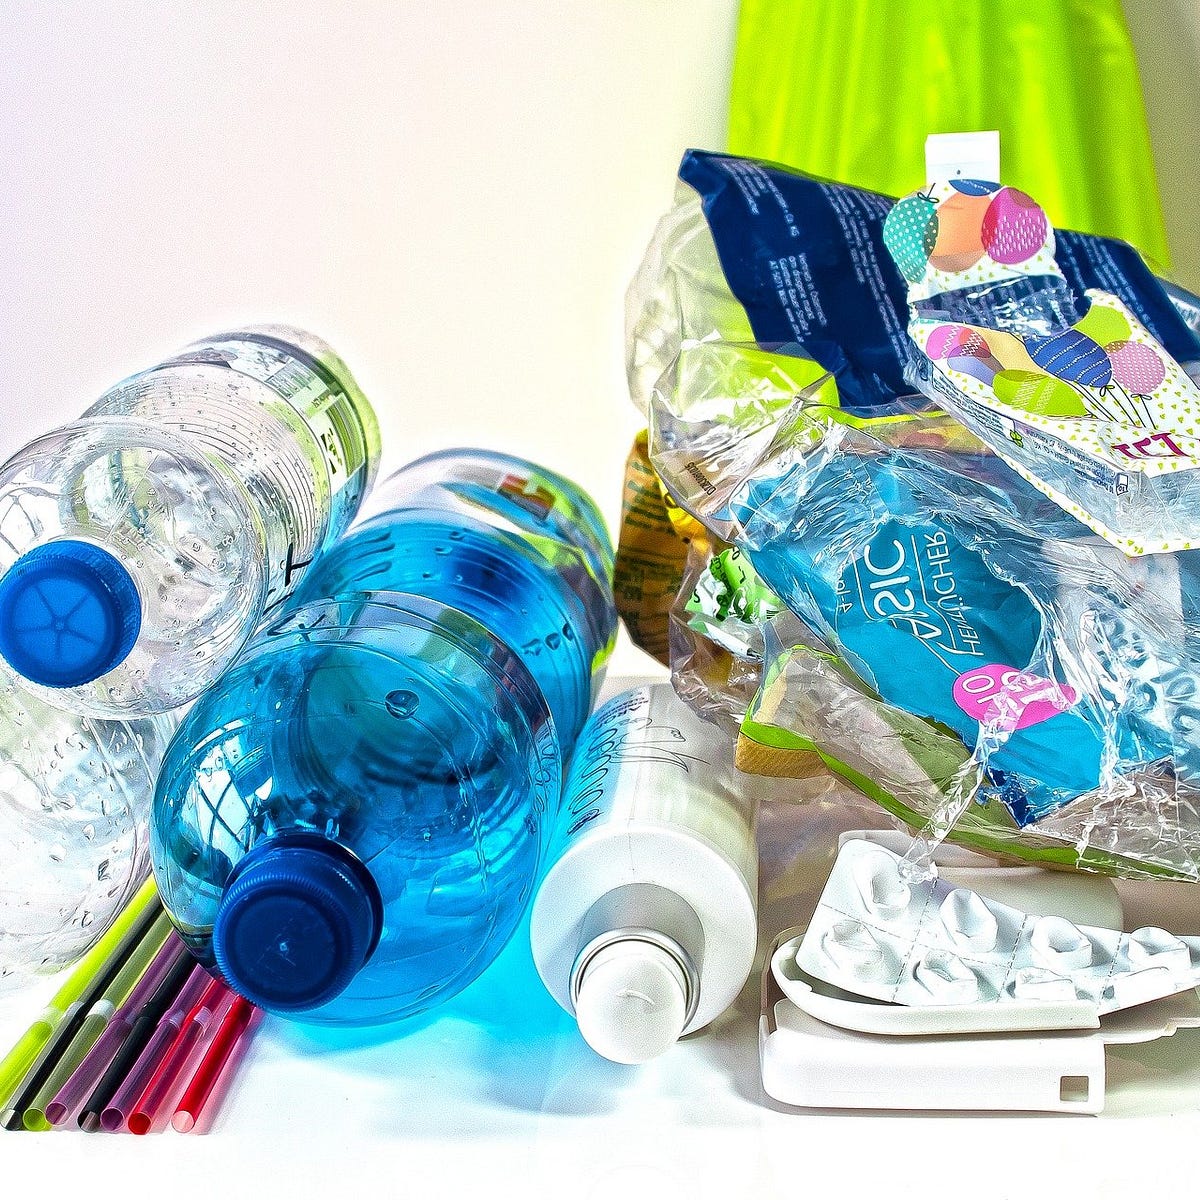 Is It Safe To Reuse Plastic Water Bottles? - Irene's Myomassology Institute